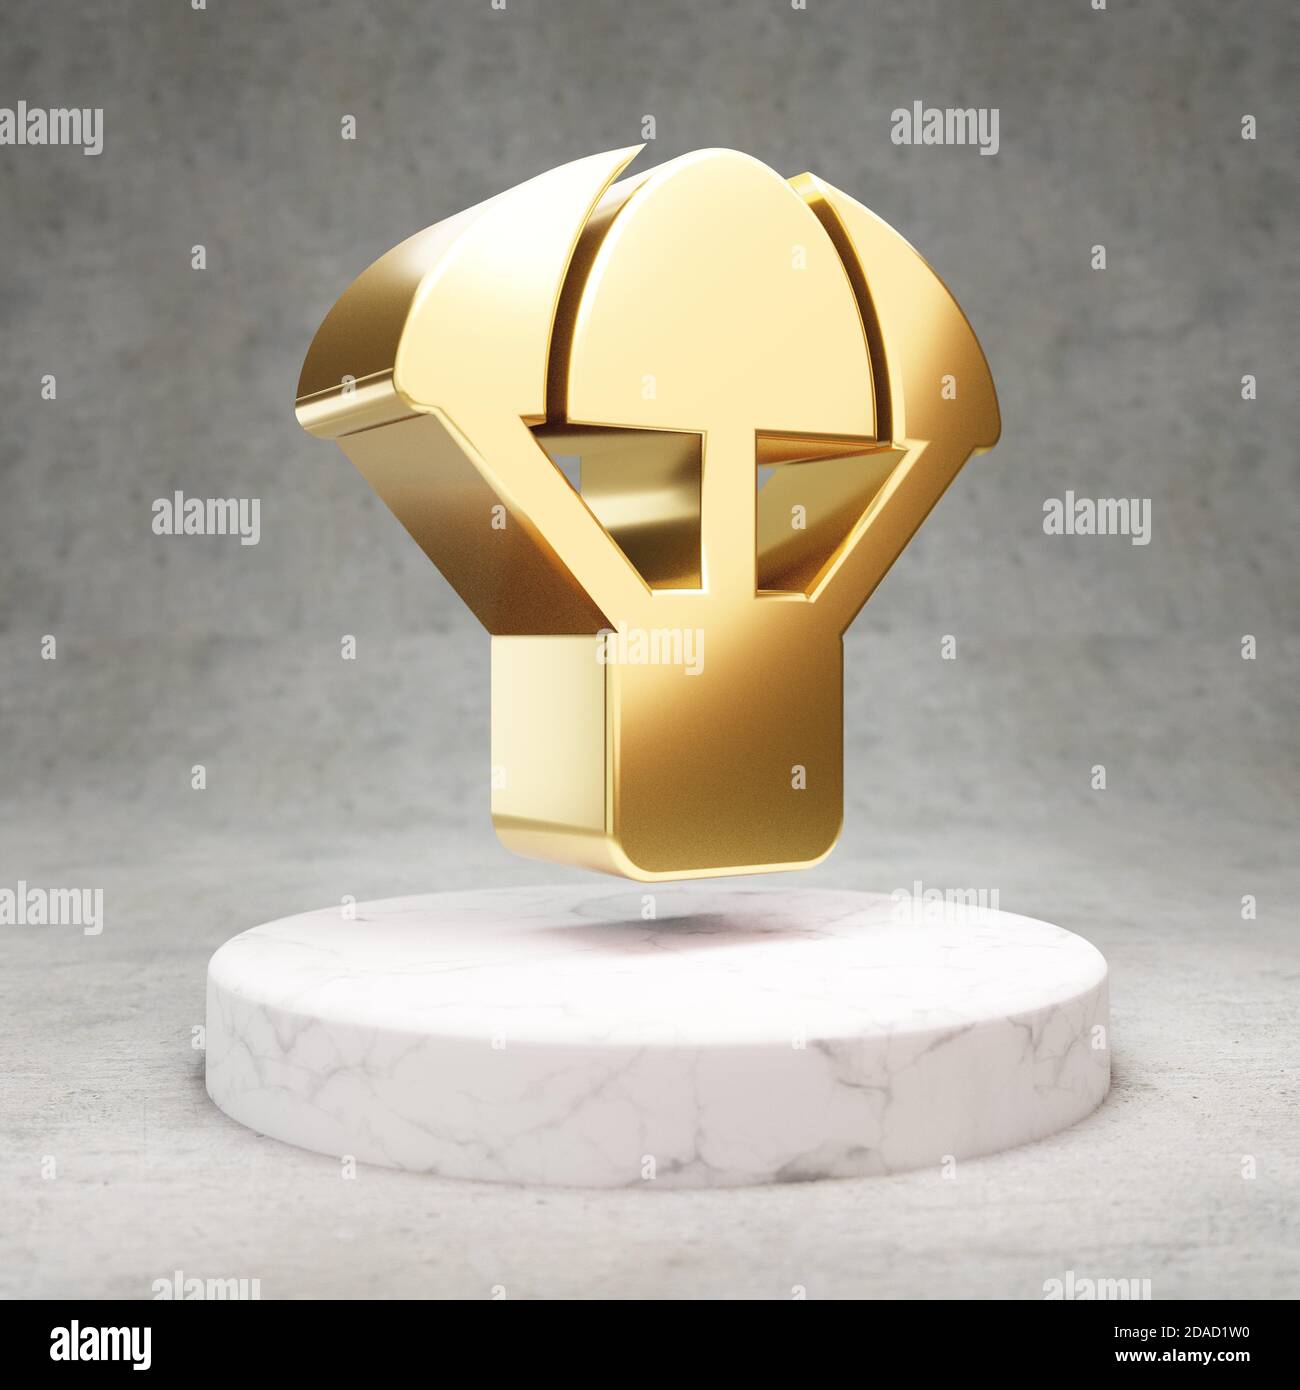 Parachute Box icon. Gold glossy Parachute Box symbol on white marble podium. Modern icon for website, social media, presentation, design template element. 3D render. Stock Photo